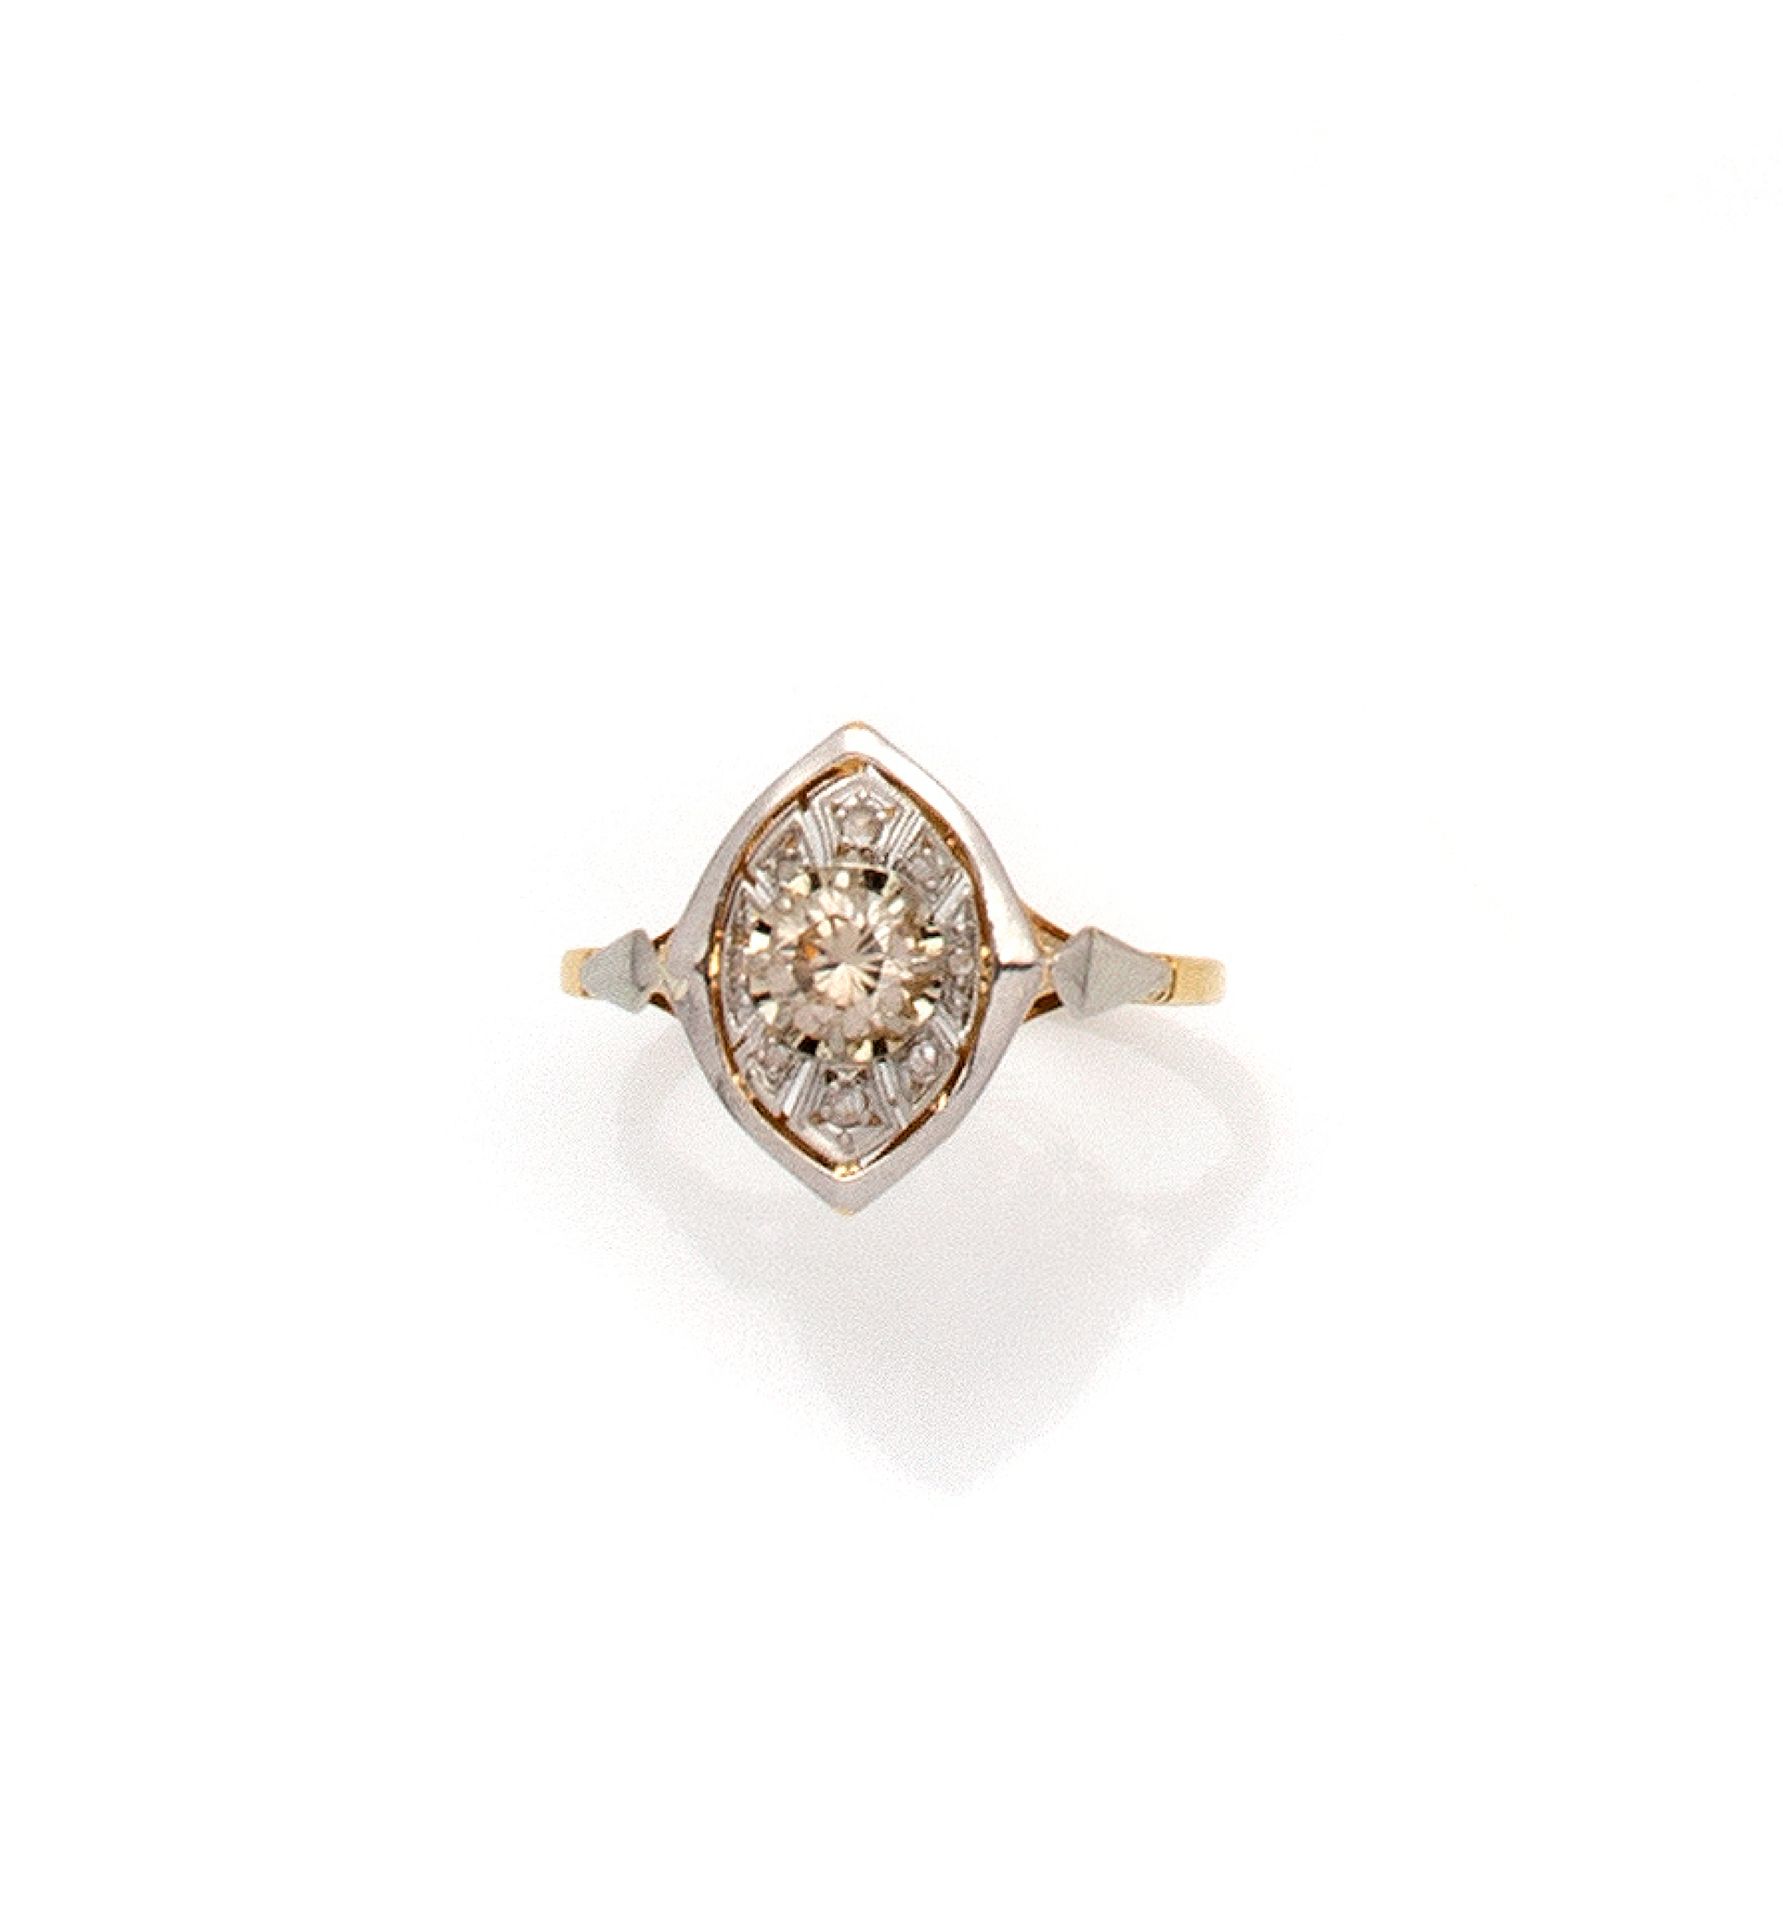 Null 一枚18K（750/1000）双色金榄尖形戒指，在8颗玫瑰式切割钻石的镂空镶嵌下，用爪子镶嵌了一颗重达0.40克拉的明亮式切割钻石。

法国的工作。标&hellip;